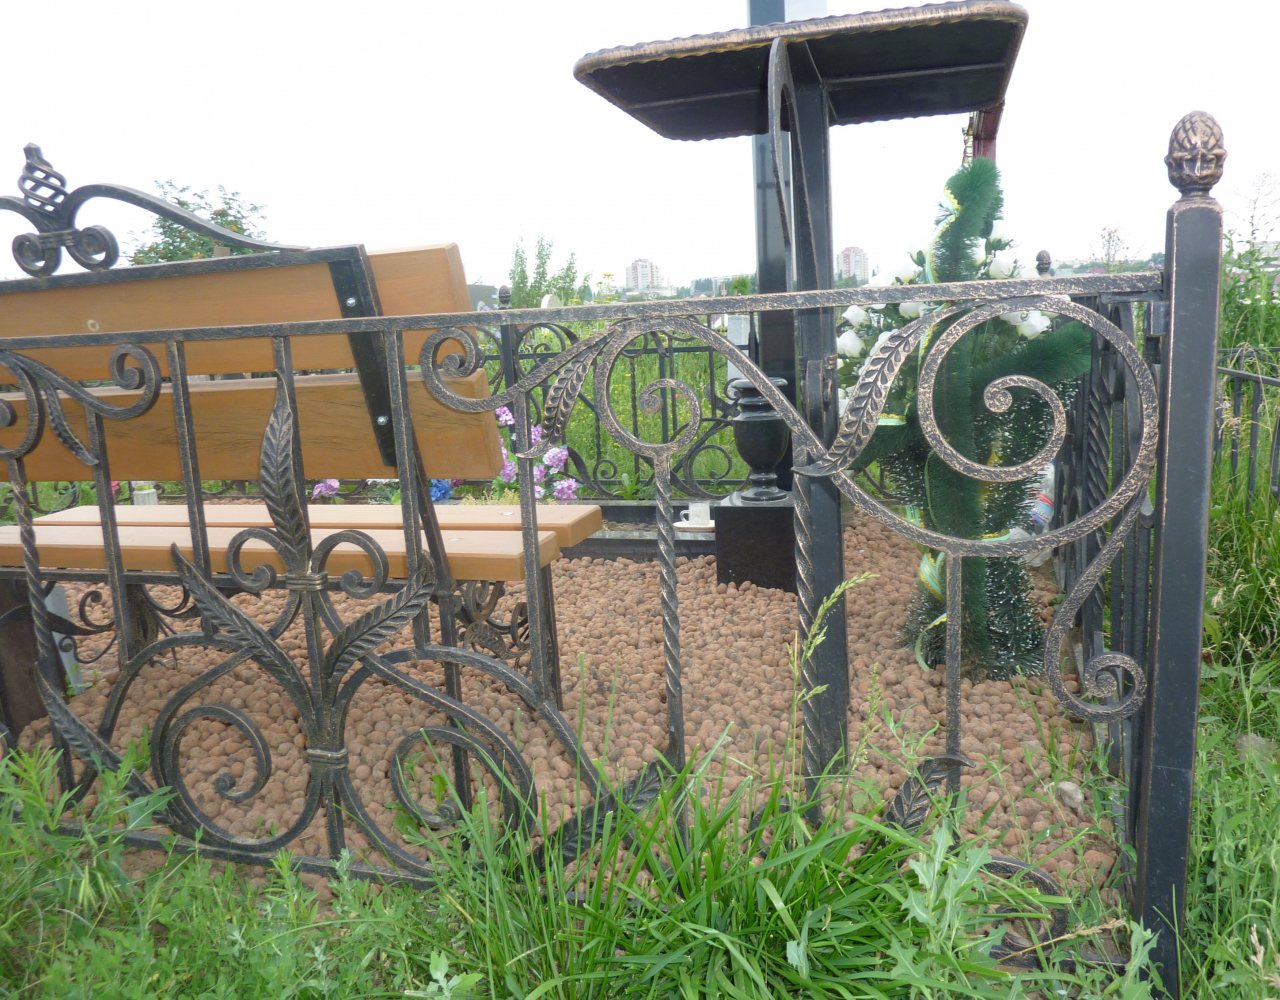 Кованая ограда на могилу РК-072